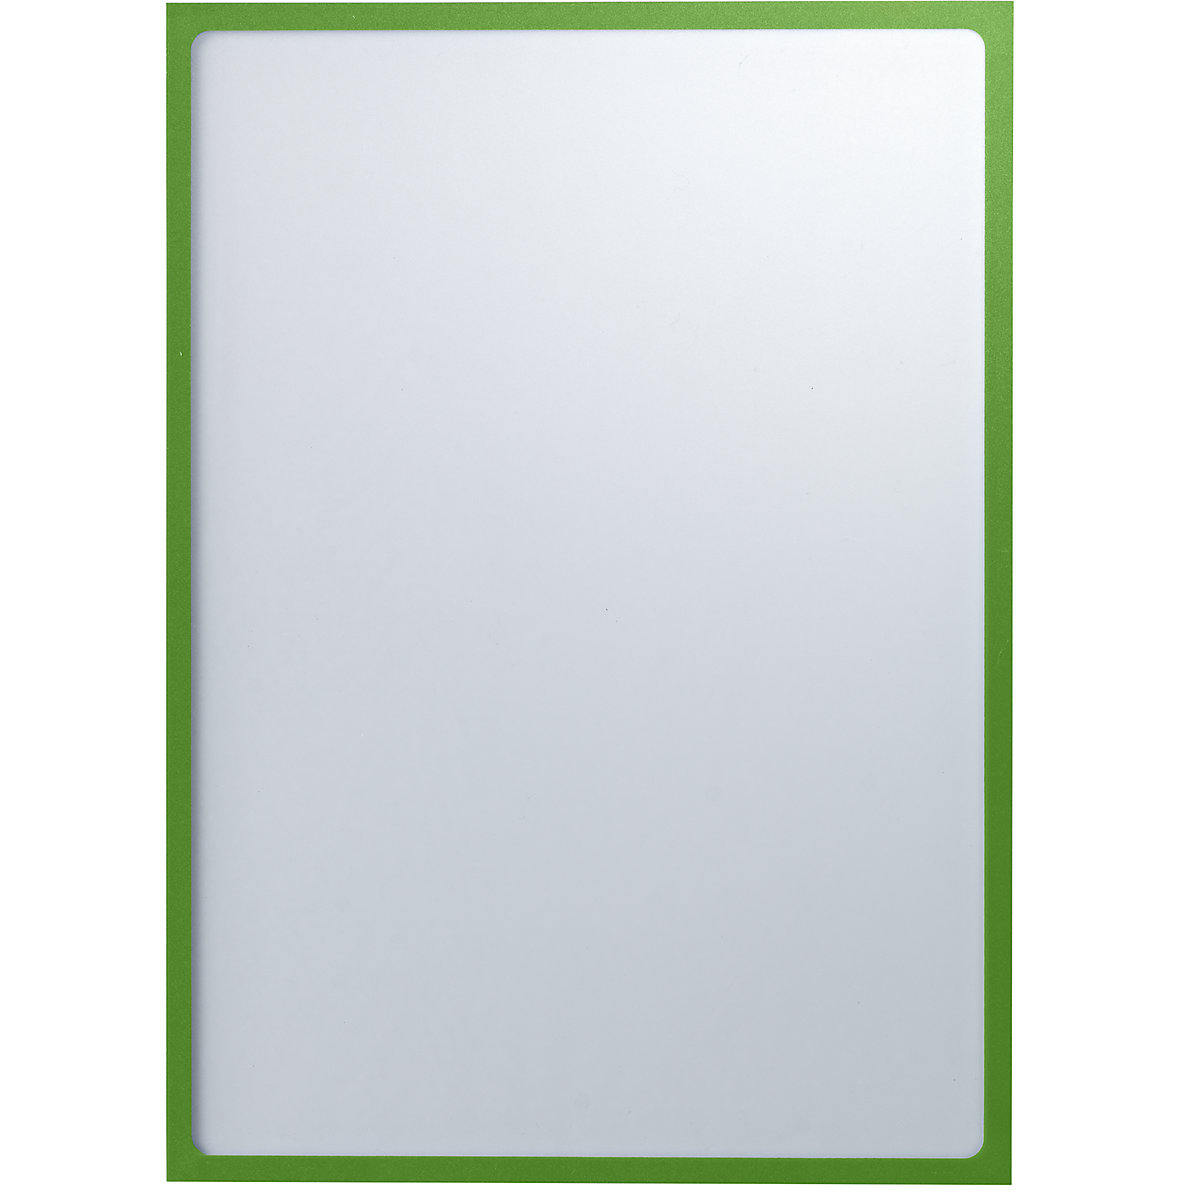 EUROKRAFTbasic – Pochette info magnétique, format A3, l x h 312 x 435 mm, cadre vert, lot de 30